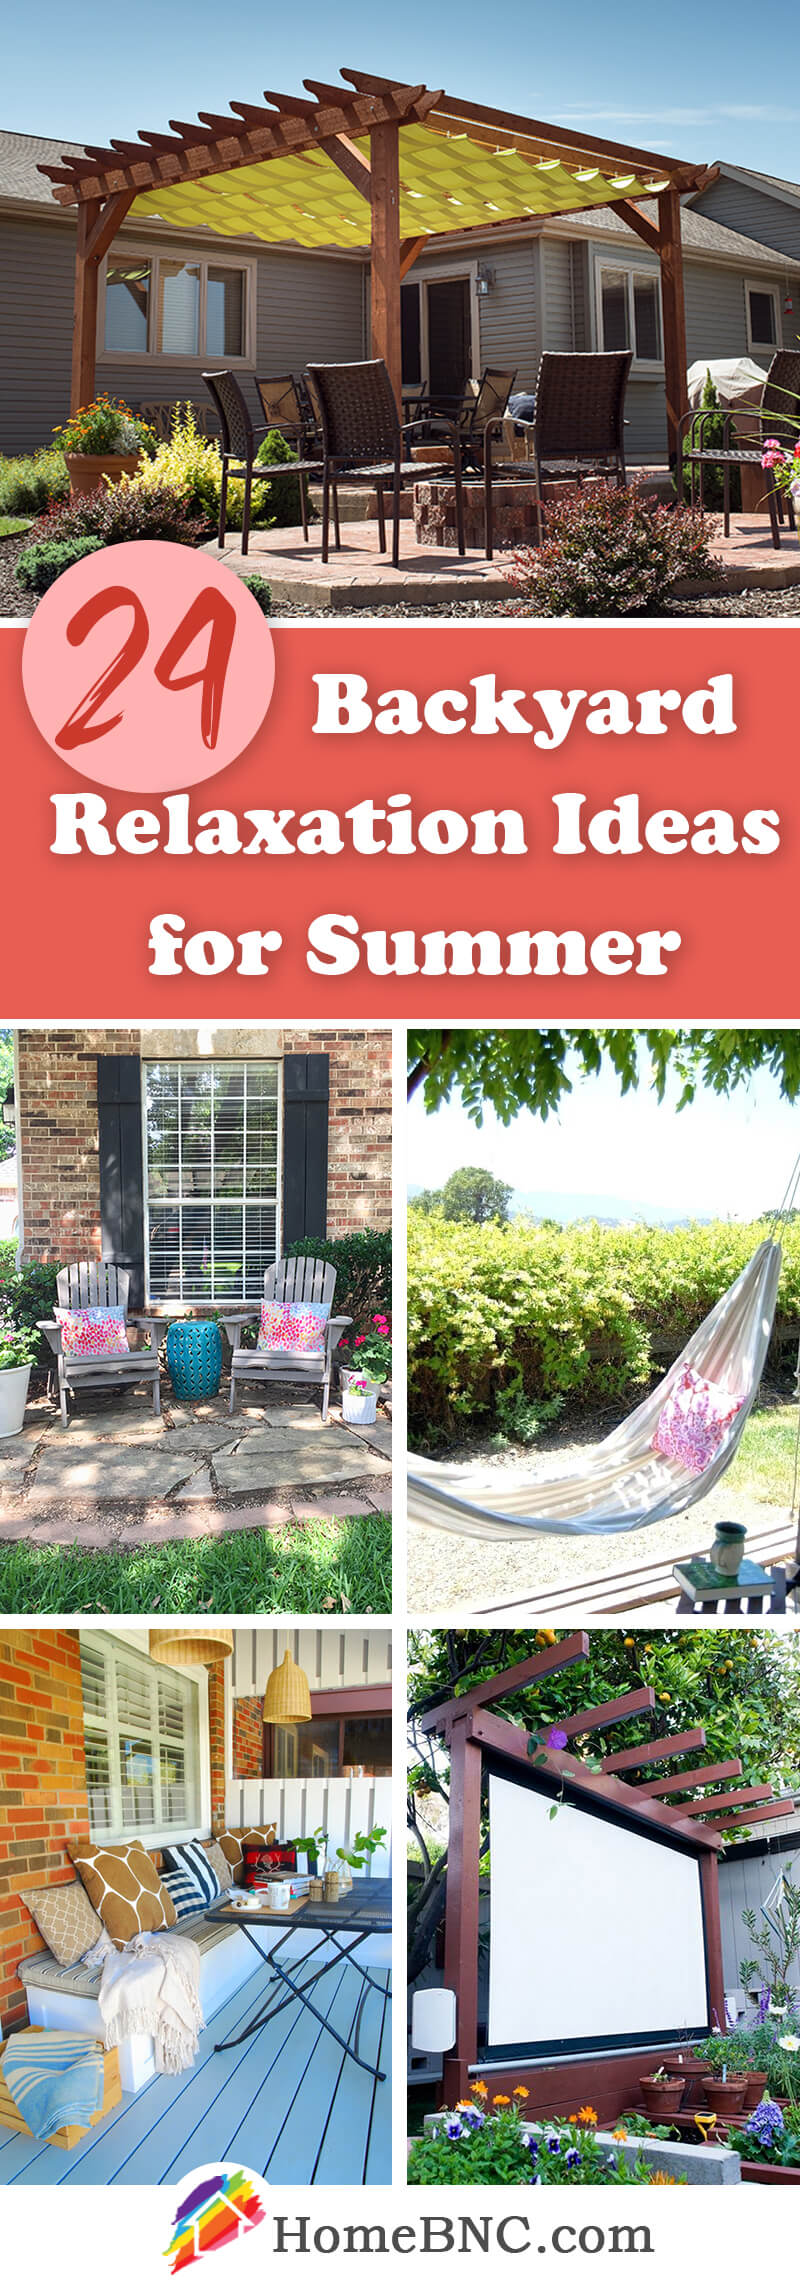 Backyard Relaxation Ideas